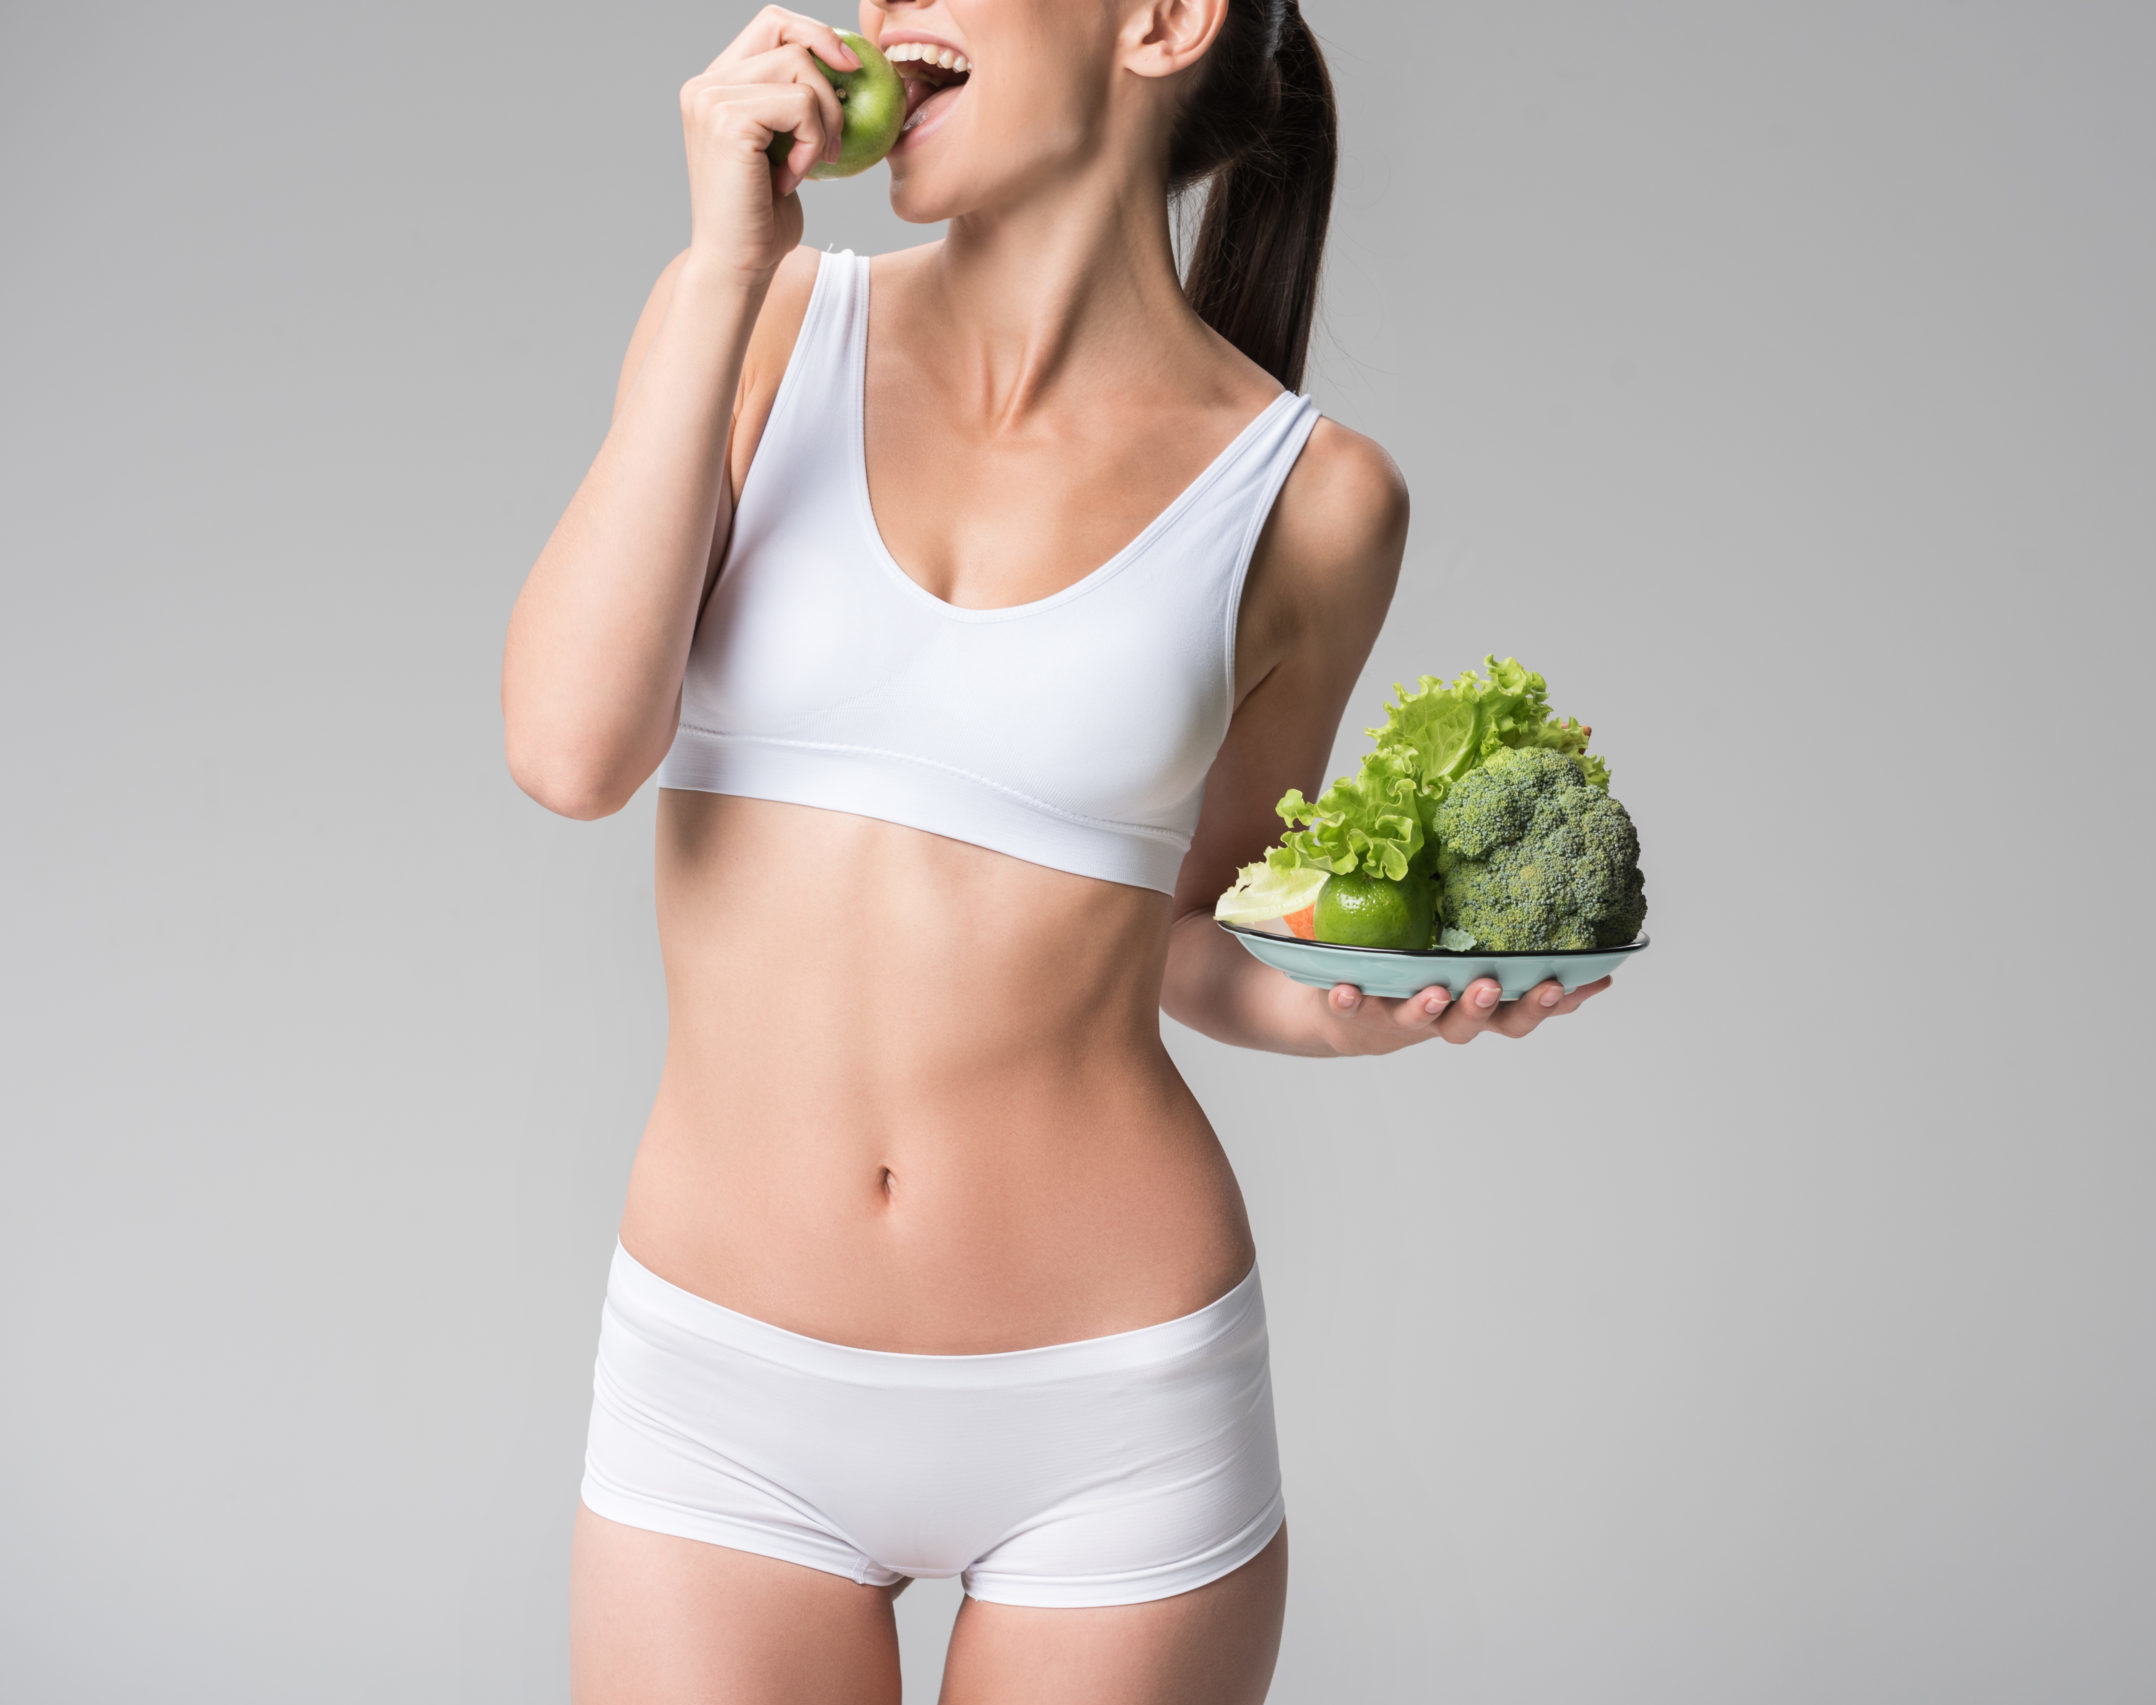 Happy young thin woman biting green fruit | Absolute Health Care | Newnan GA